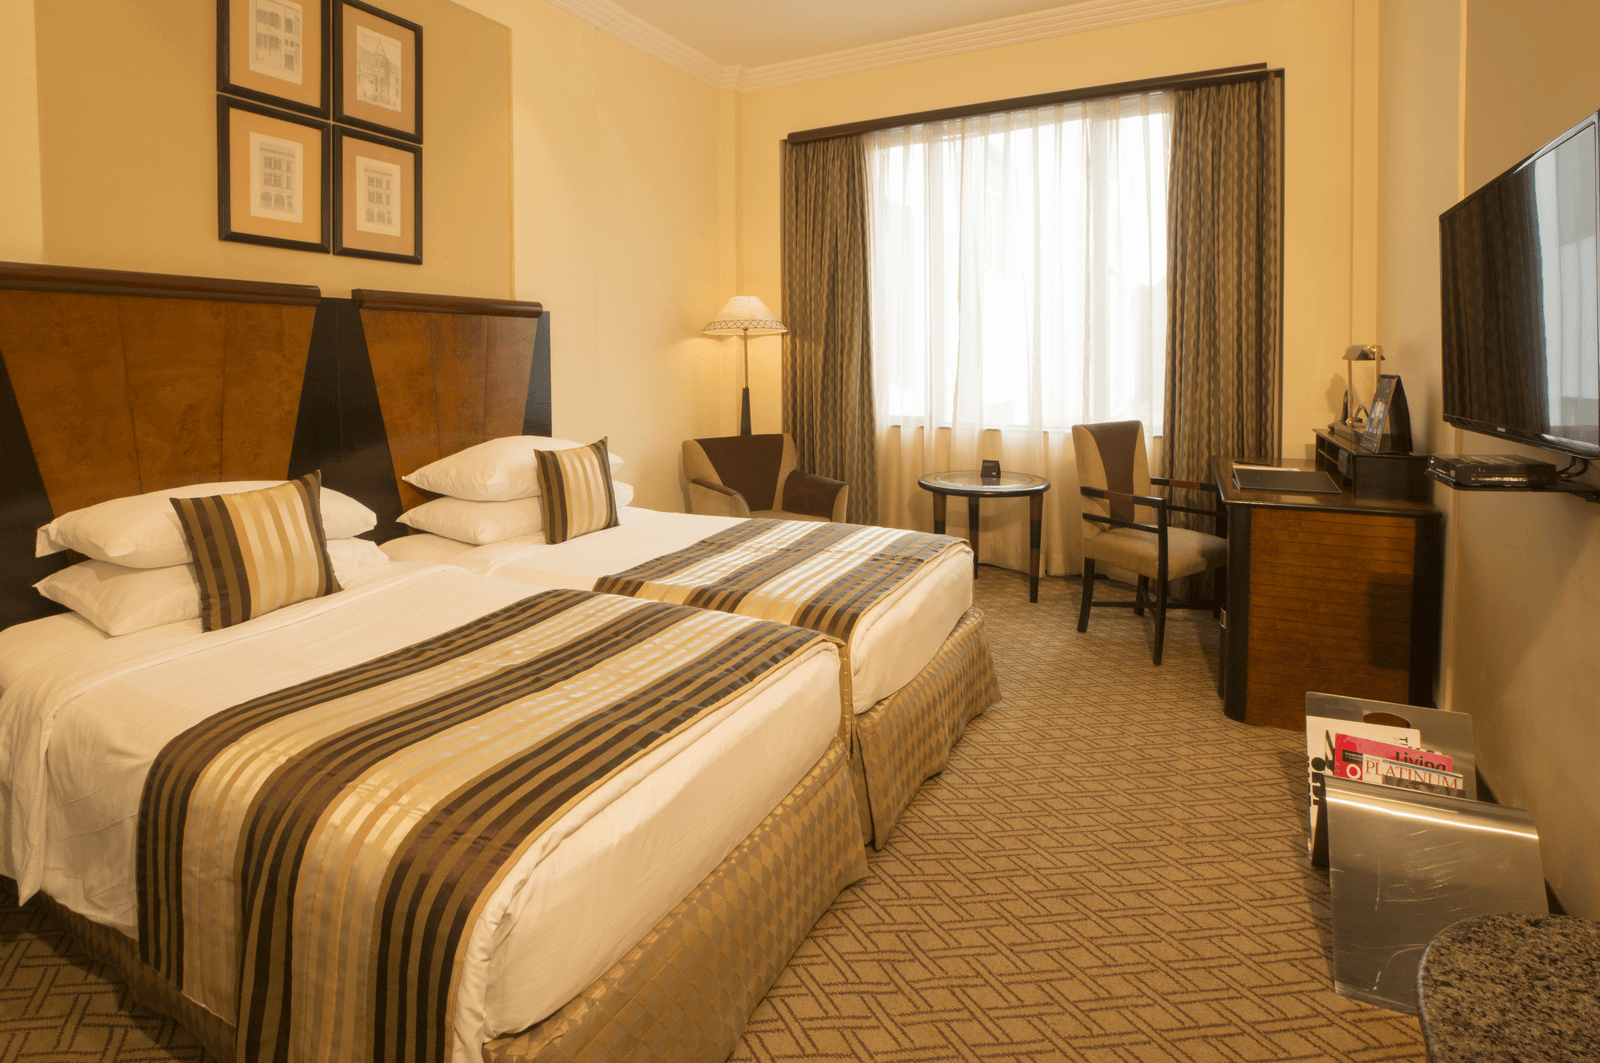 Deluxe Rooms at The Park Hotels Kolkata